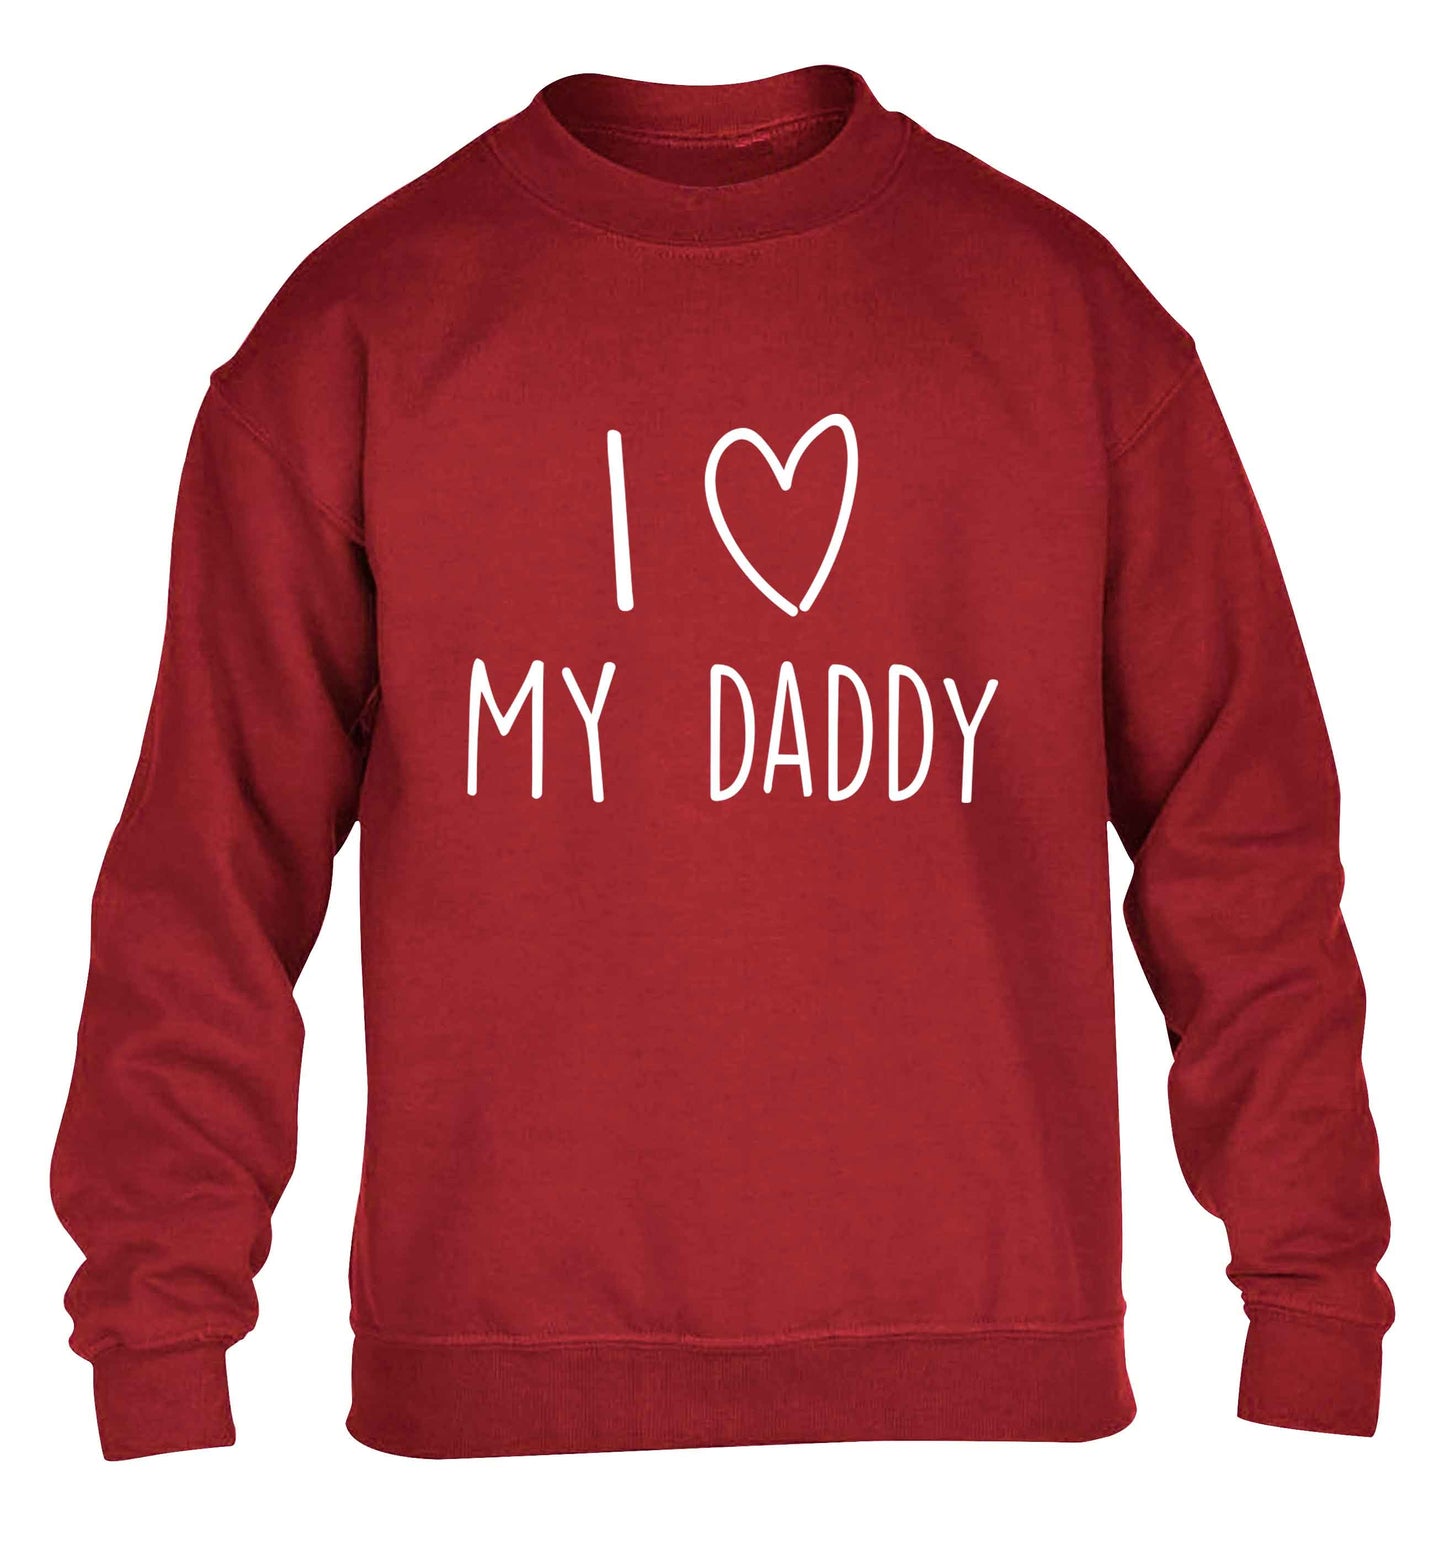 I love my daddy children's grey sweater 12-13 Years